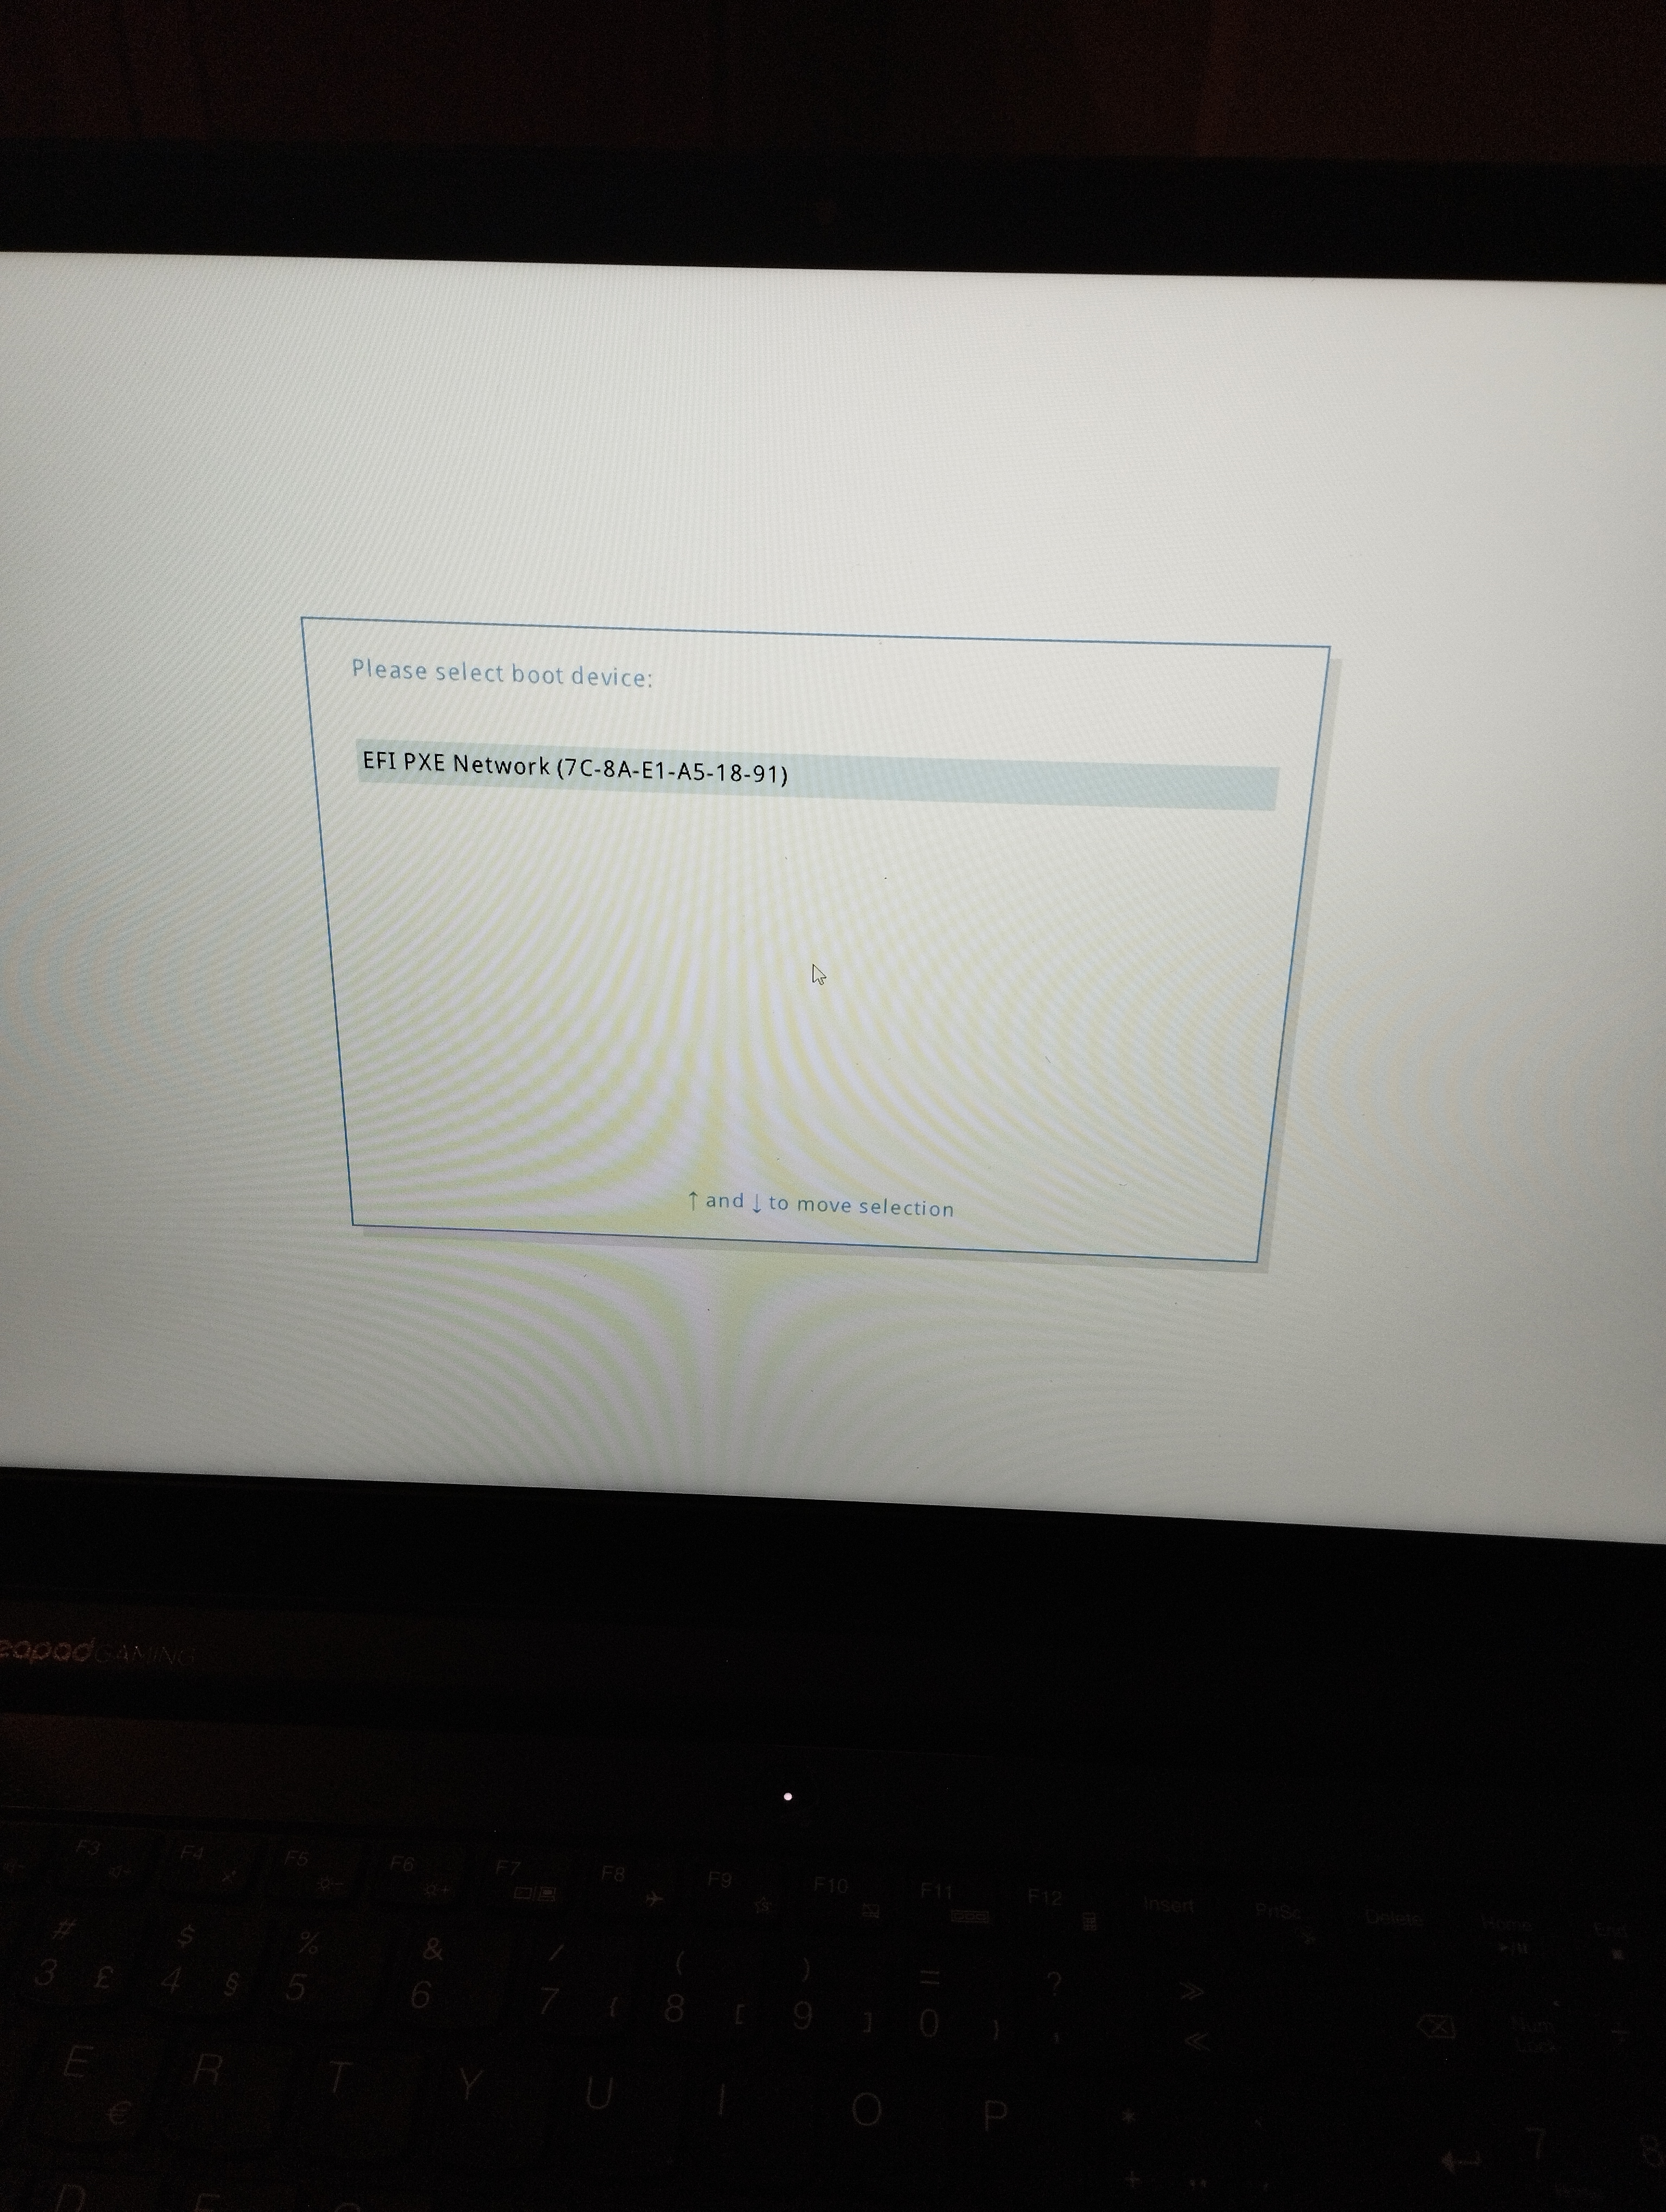 No Bootable Device на ноутбуке Acer